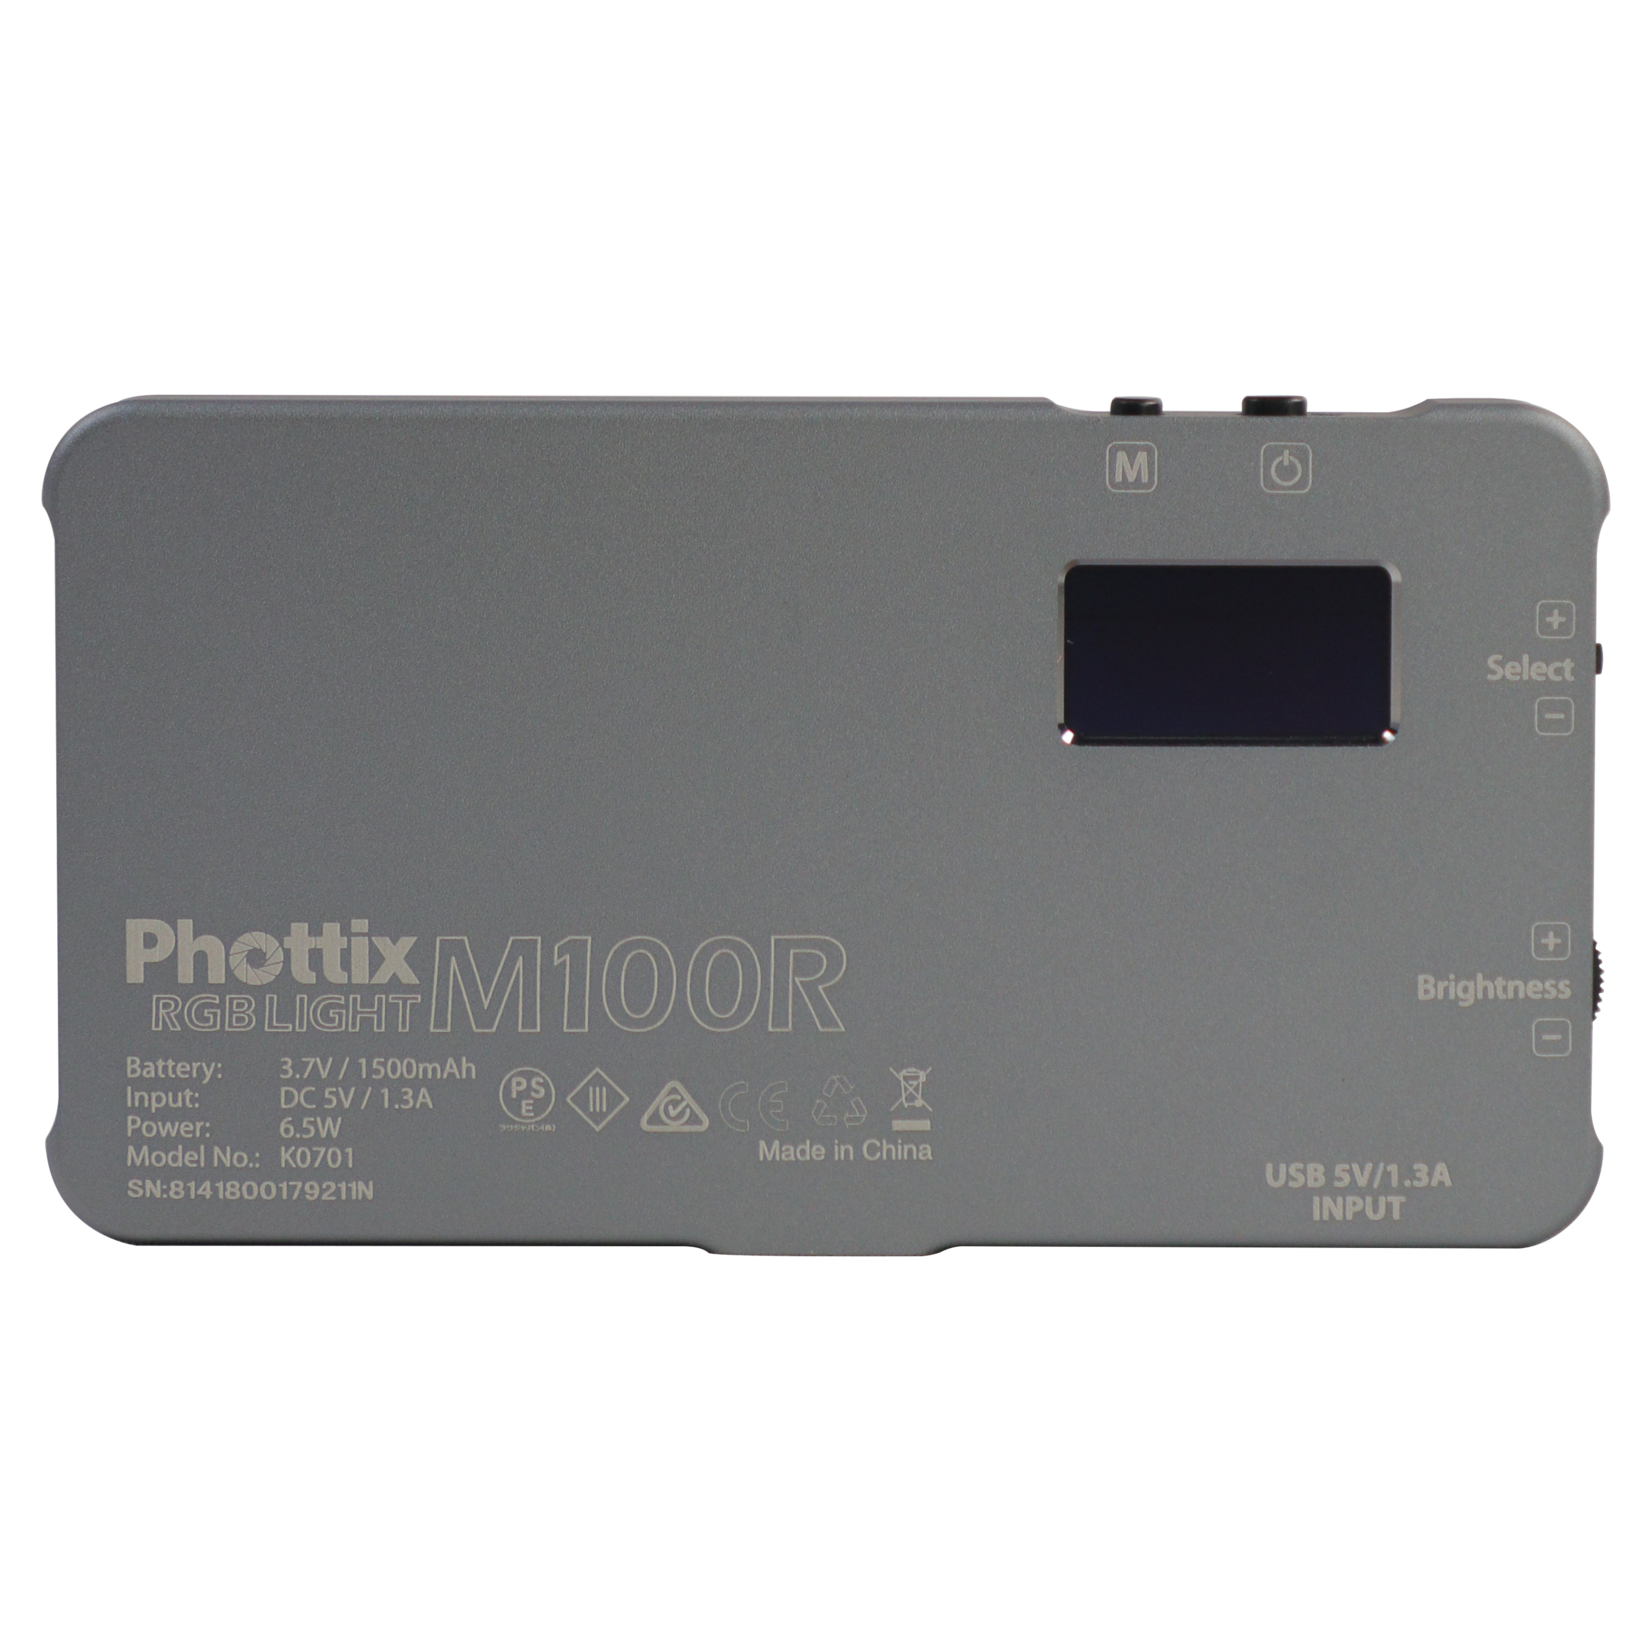 Phottix Phottix M100R RGB Light